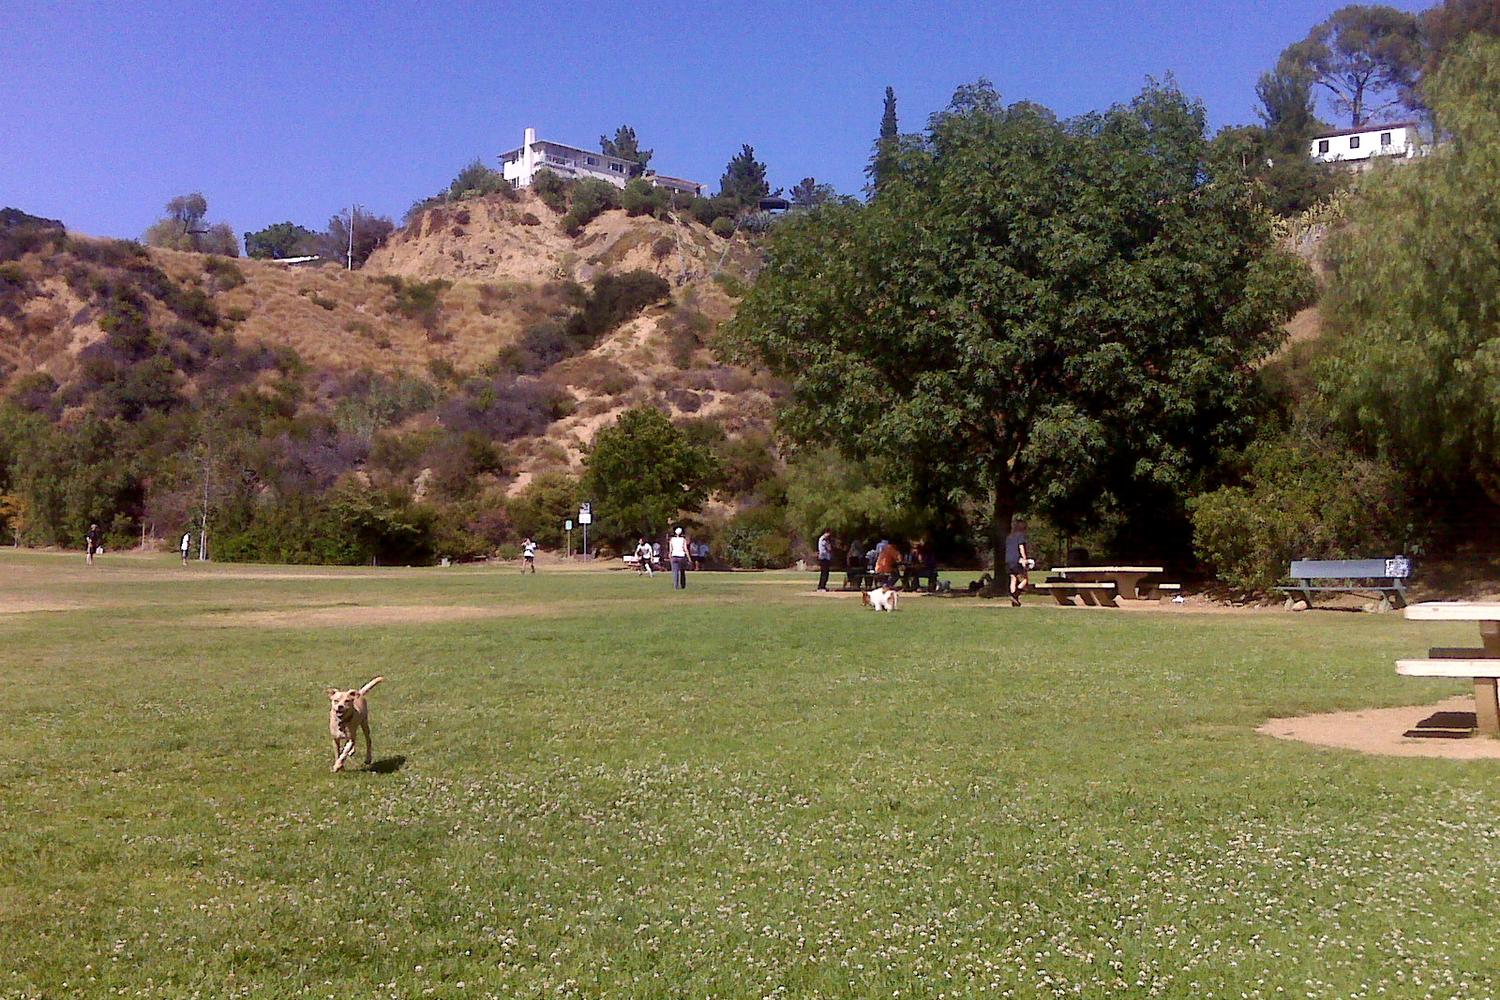 Lake Hollywood Park